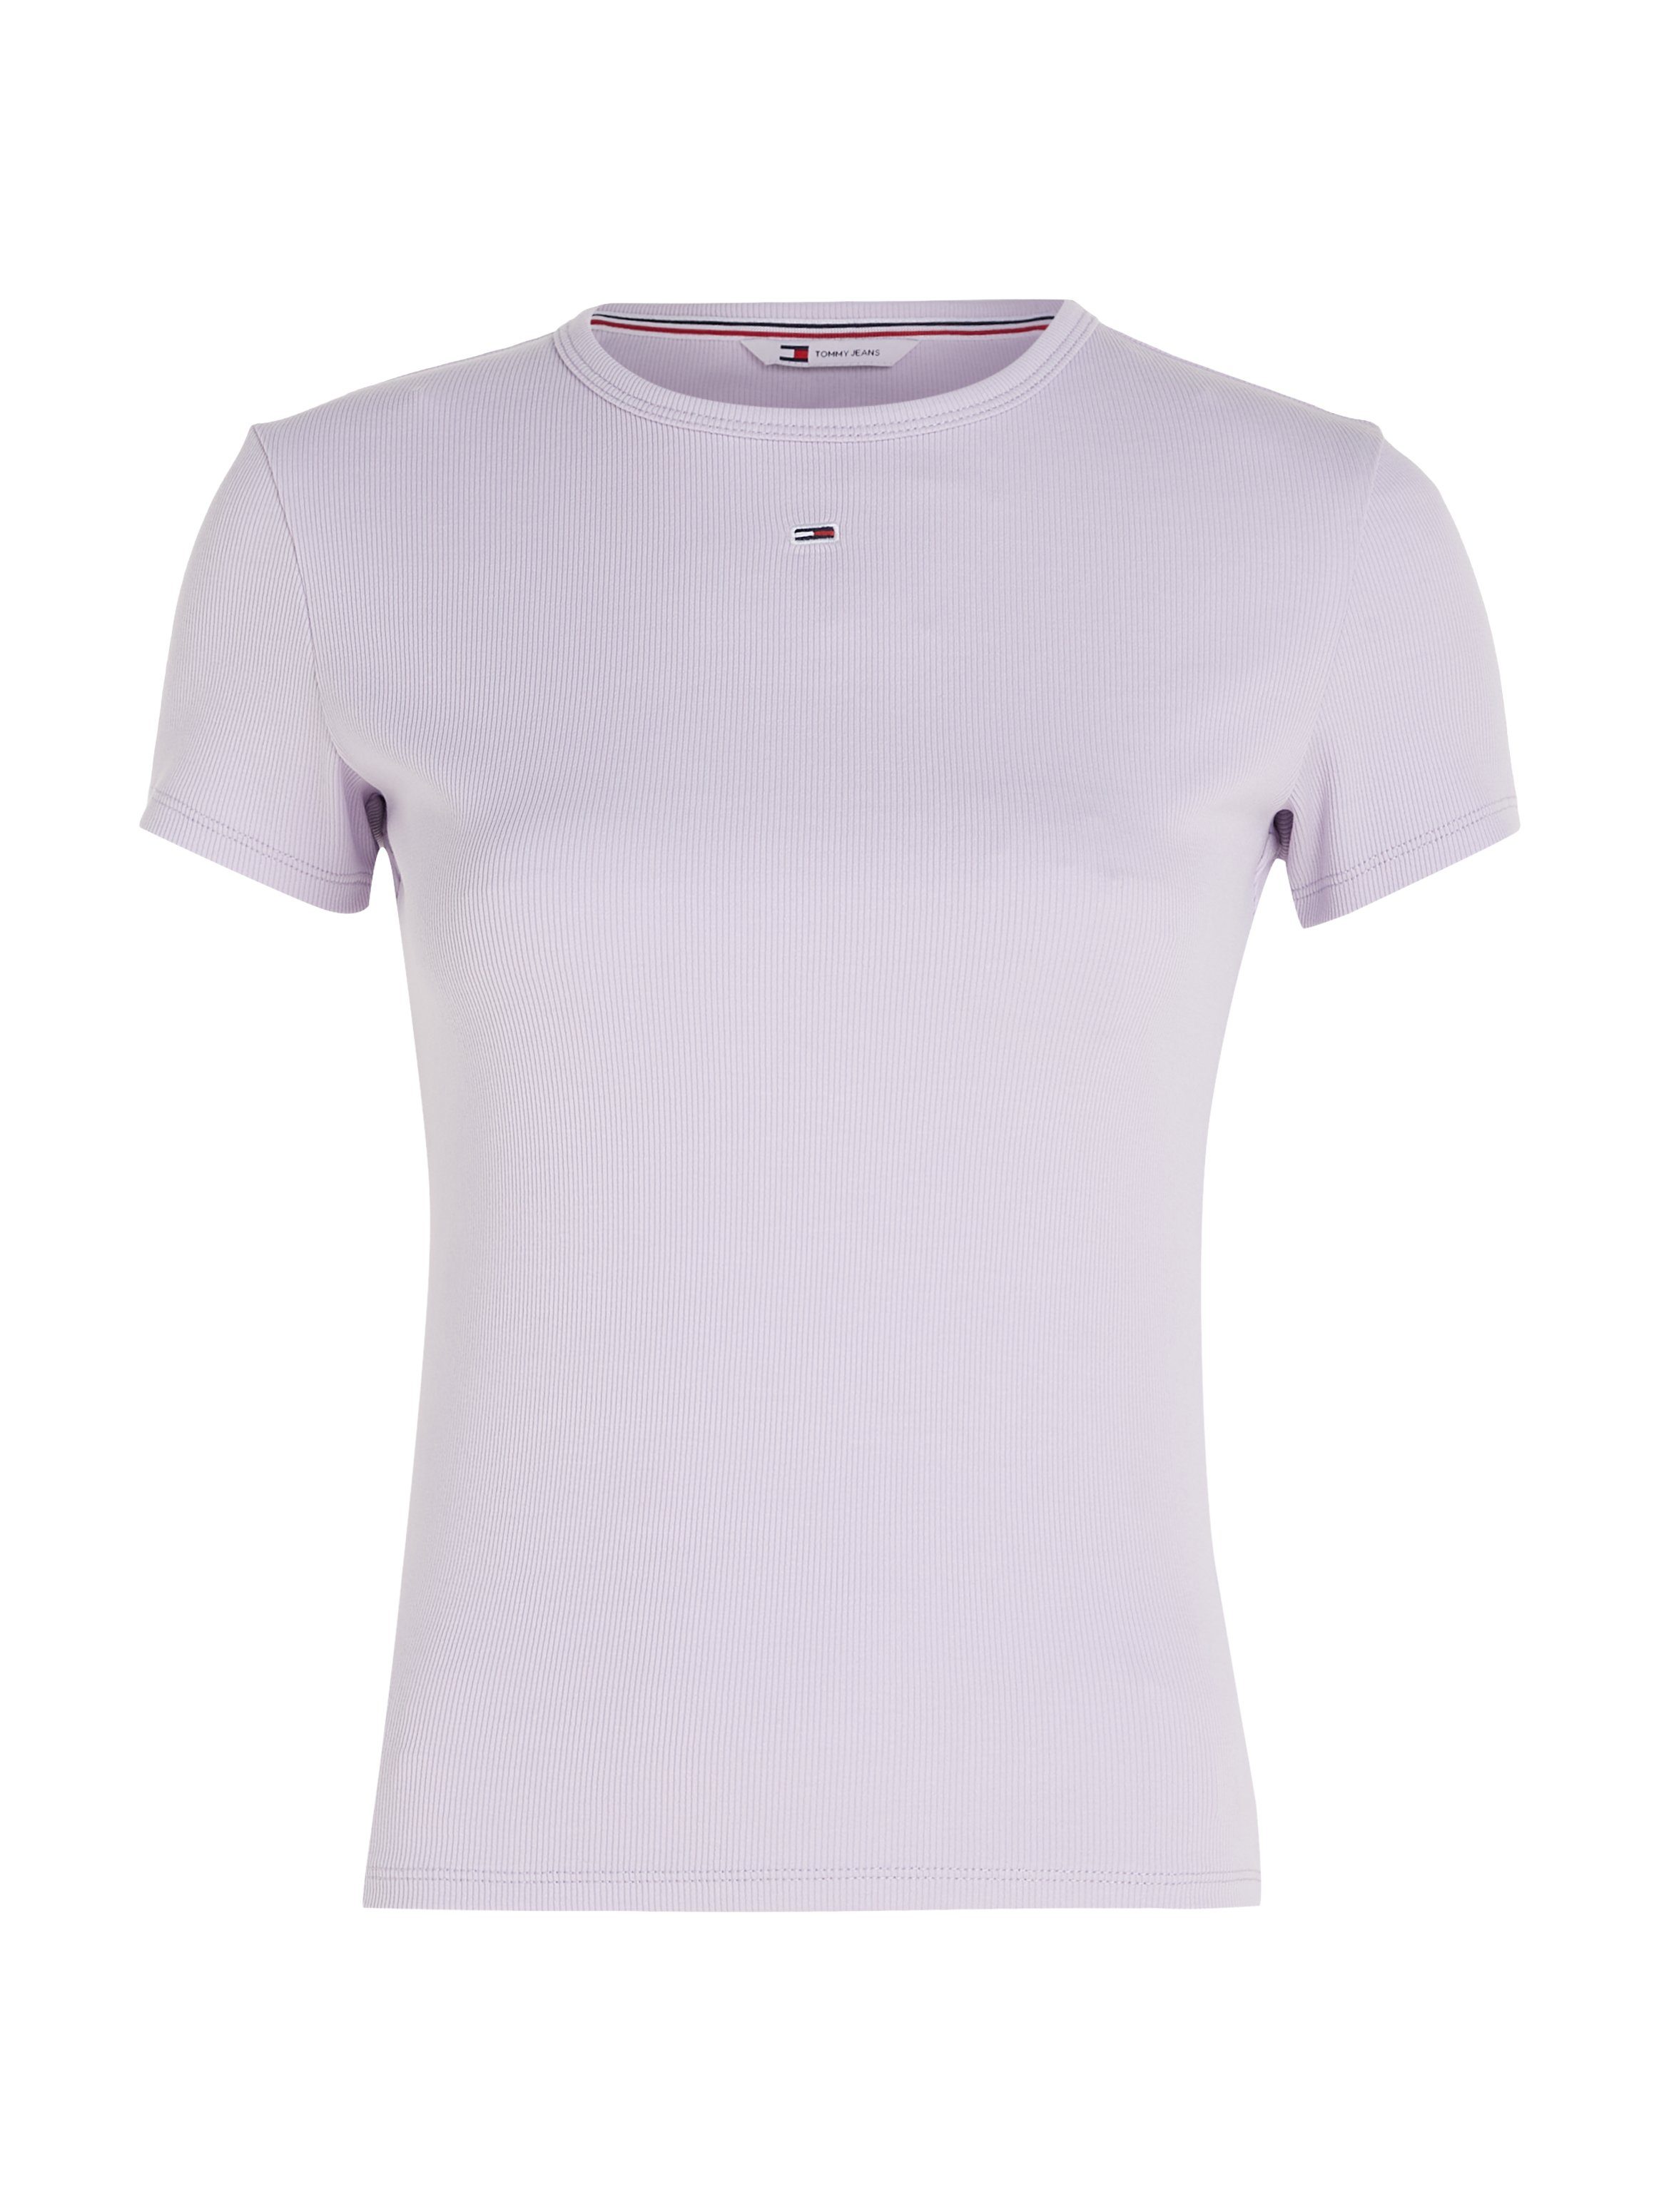 TOMMY JEANS T-shirt Slim Essential Rib Shirt Rippshirt Rundhalsshirt